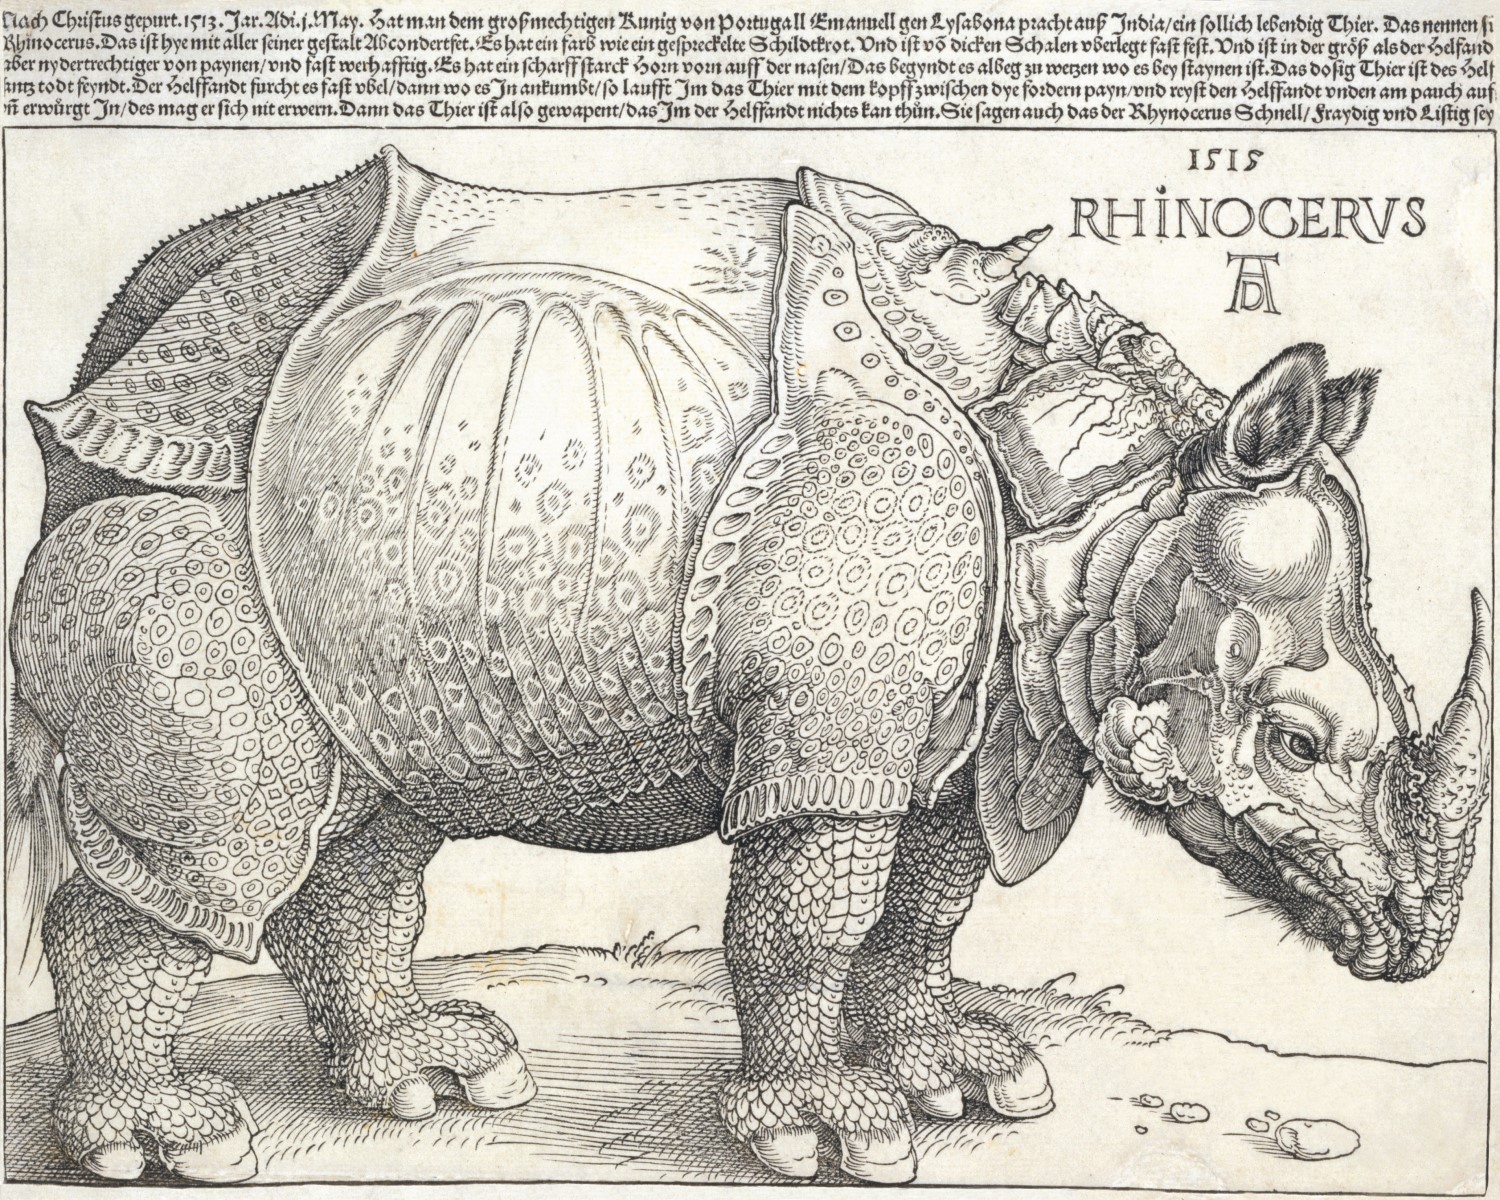 Albrecht DÃ¼rer, Rhinocerus (Rhinoceros), 1515, woodcut print